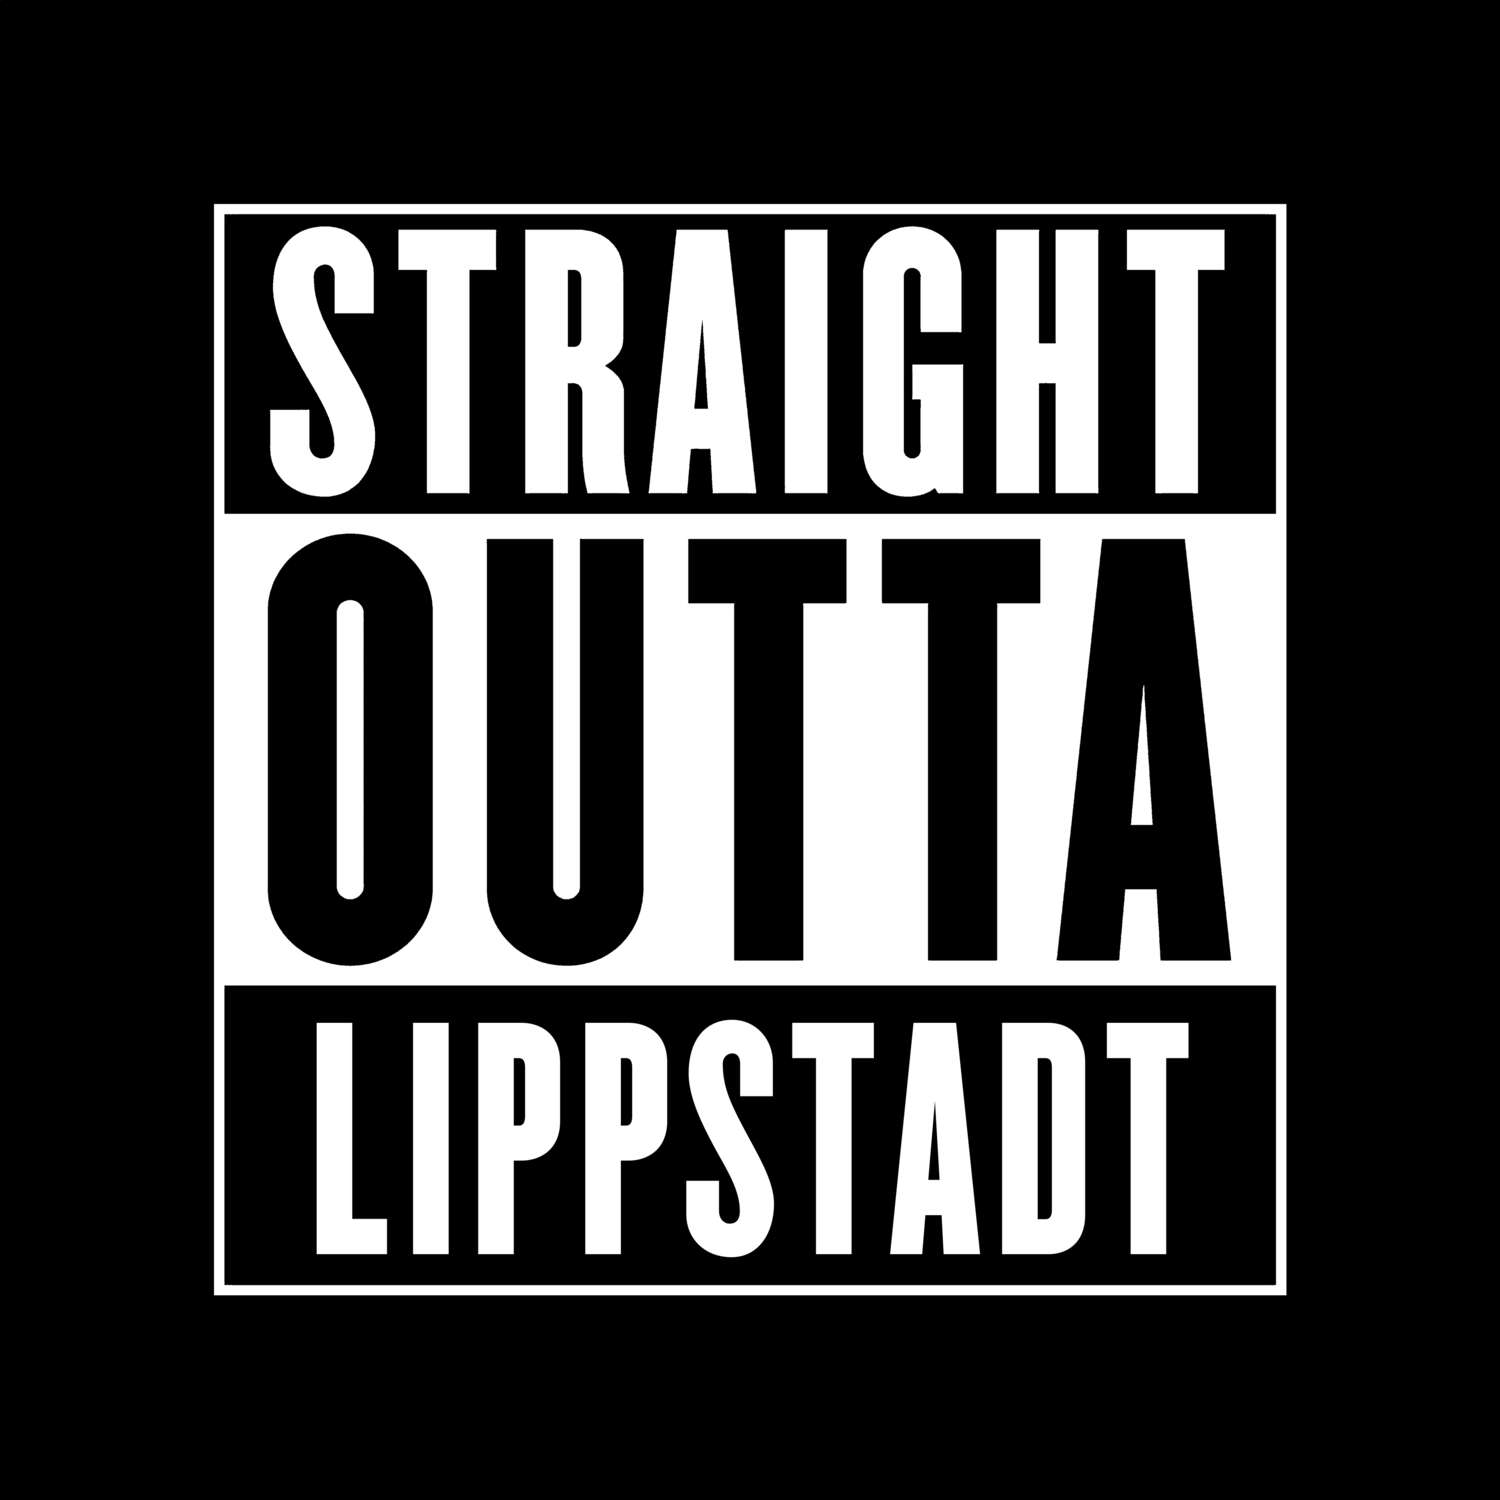 Lippstadt T-Shirt »Straight Outta«